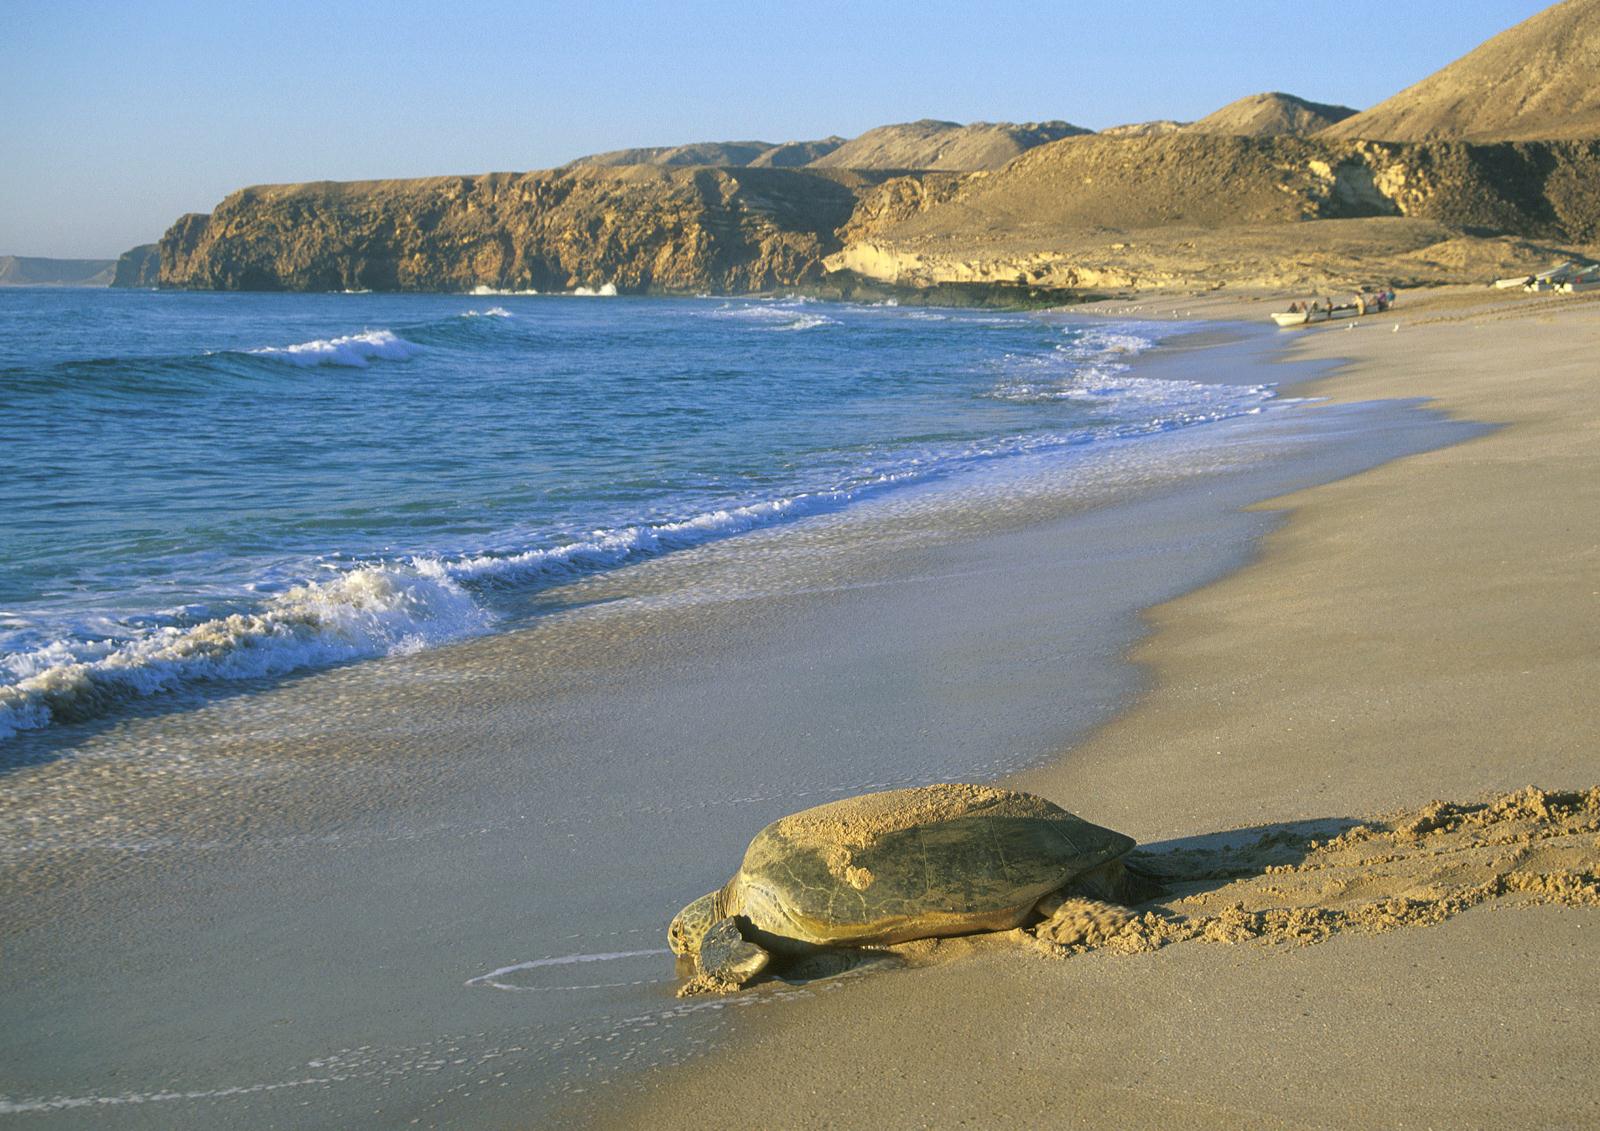 Beach - Ras al Jinz Turtle Reserve